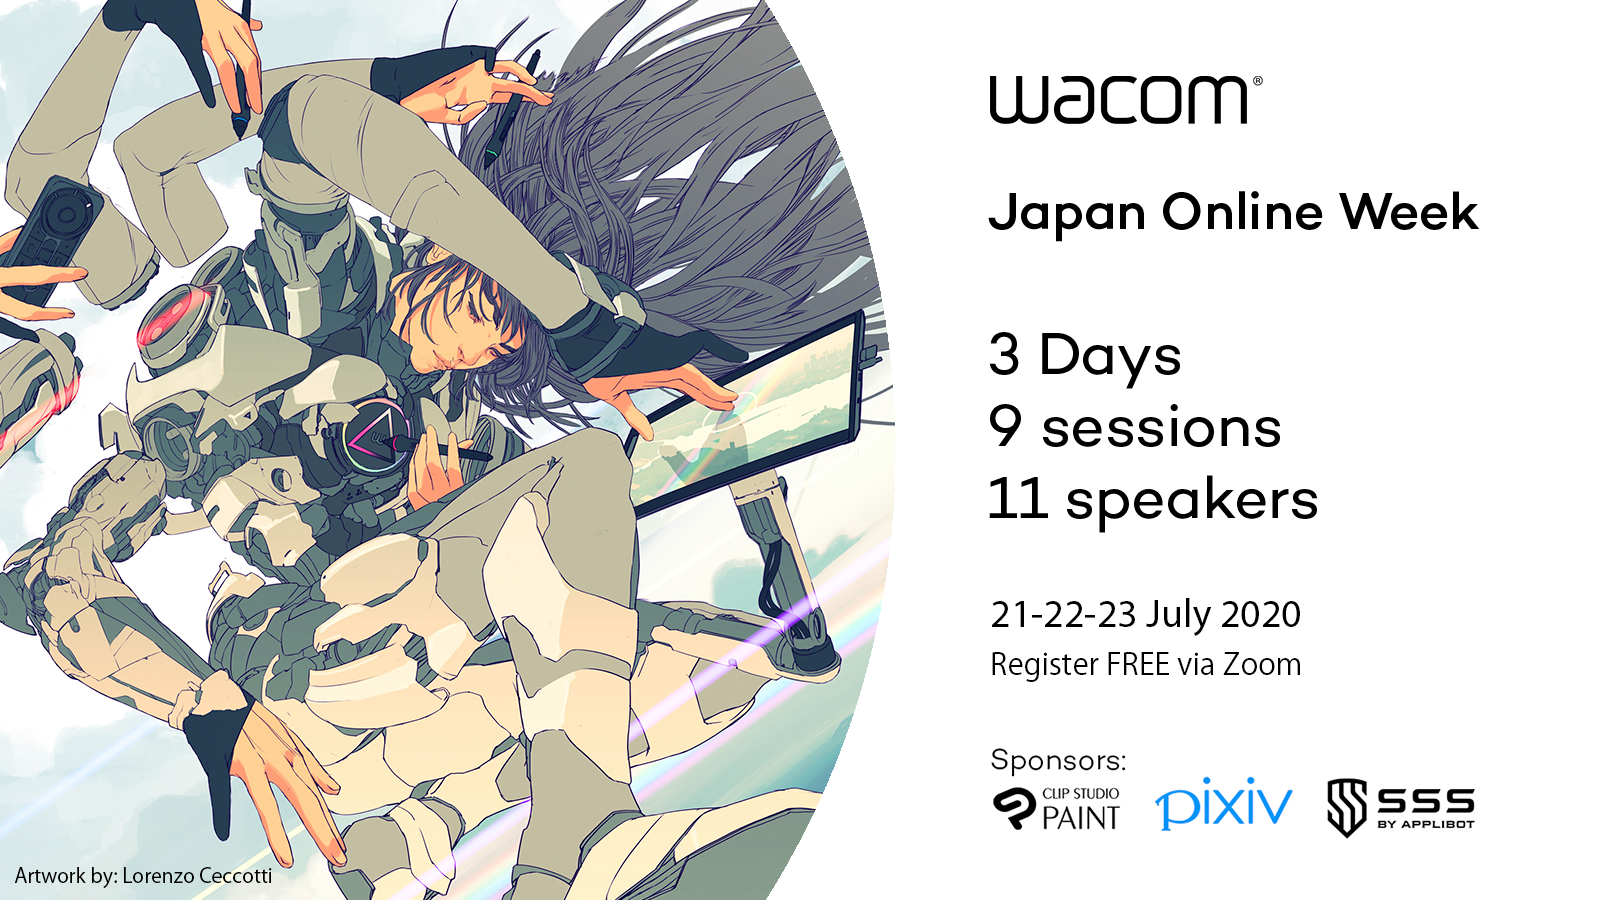 Webinar event “Japan Online Week”: Digital art industry leaders and creative professionals present workshops and live drawings